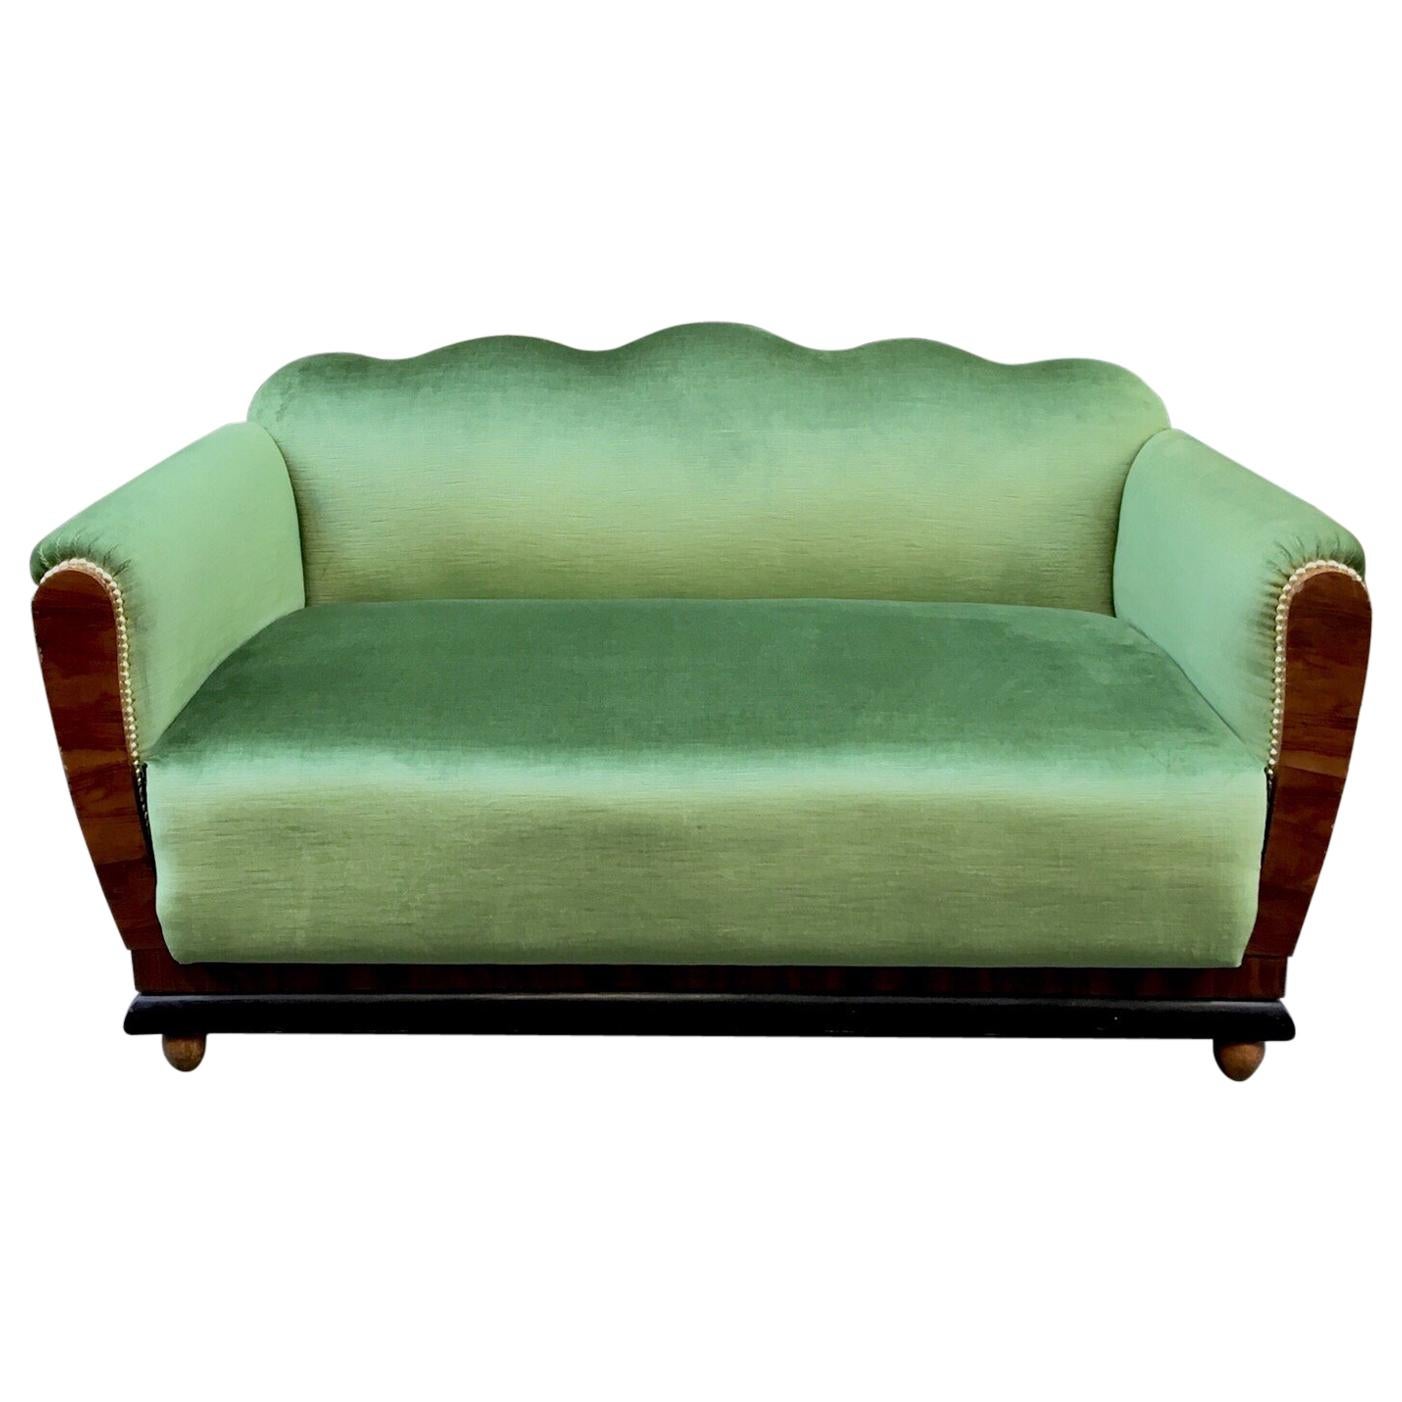 Small Art Deco Sofa Newly Upholstered with Acid Green Velvet, 1940s